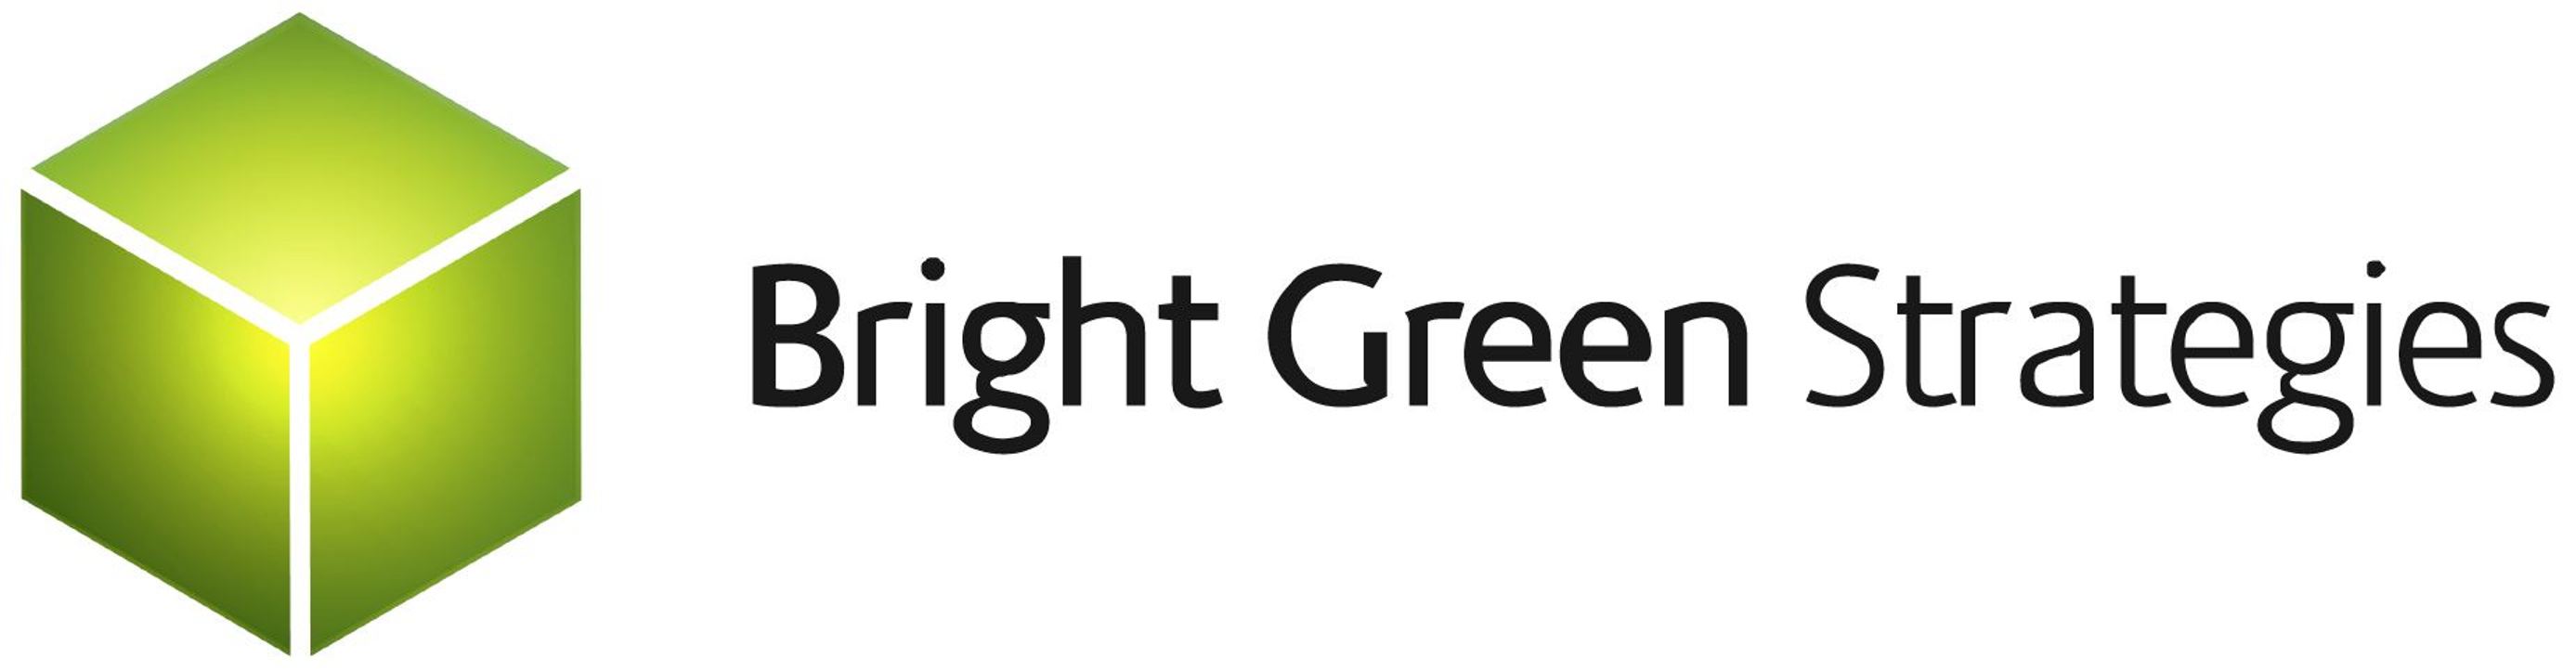 Birght Green Strategies, Inc. company logo